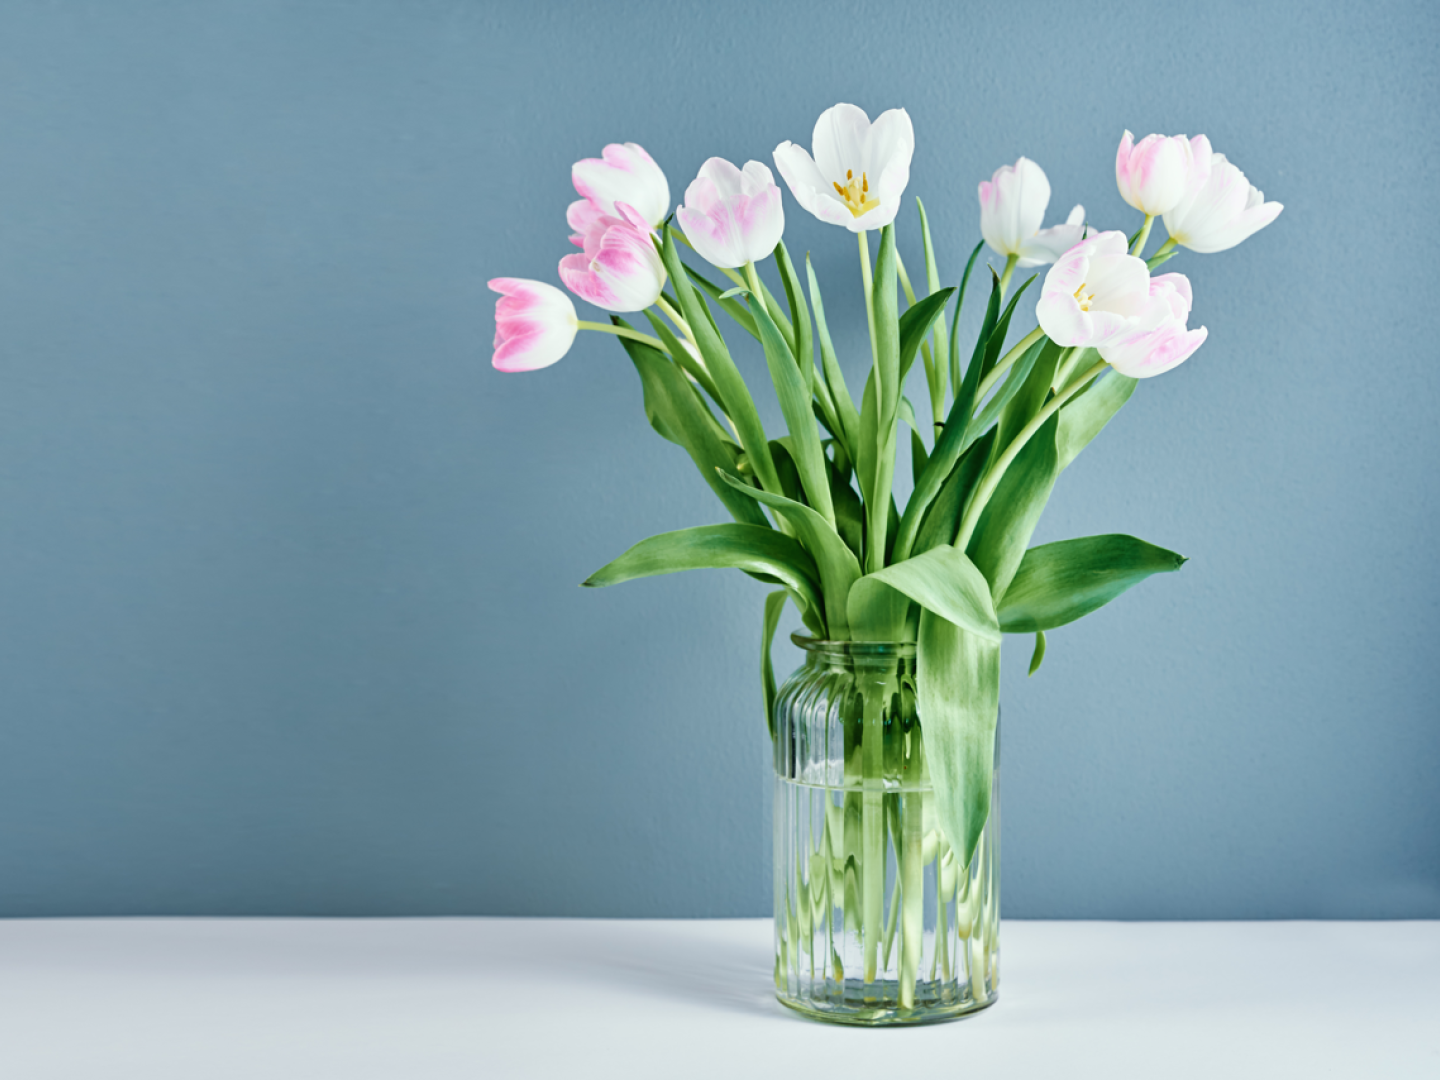 tulip flowers bouquet in vase on blue background 2022 12 16 12 49 50 utc groot